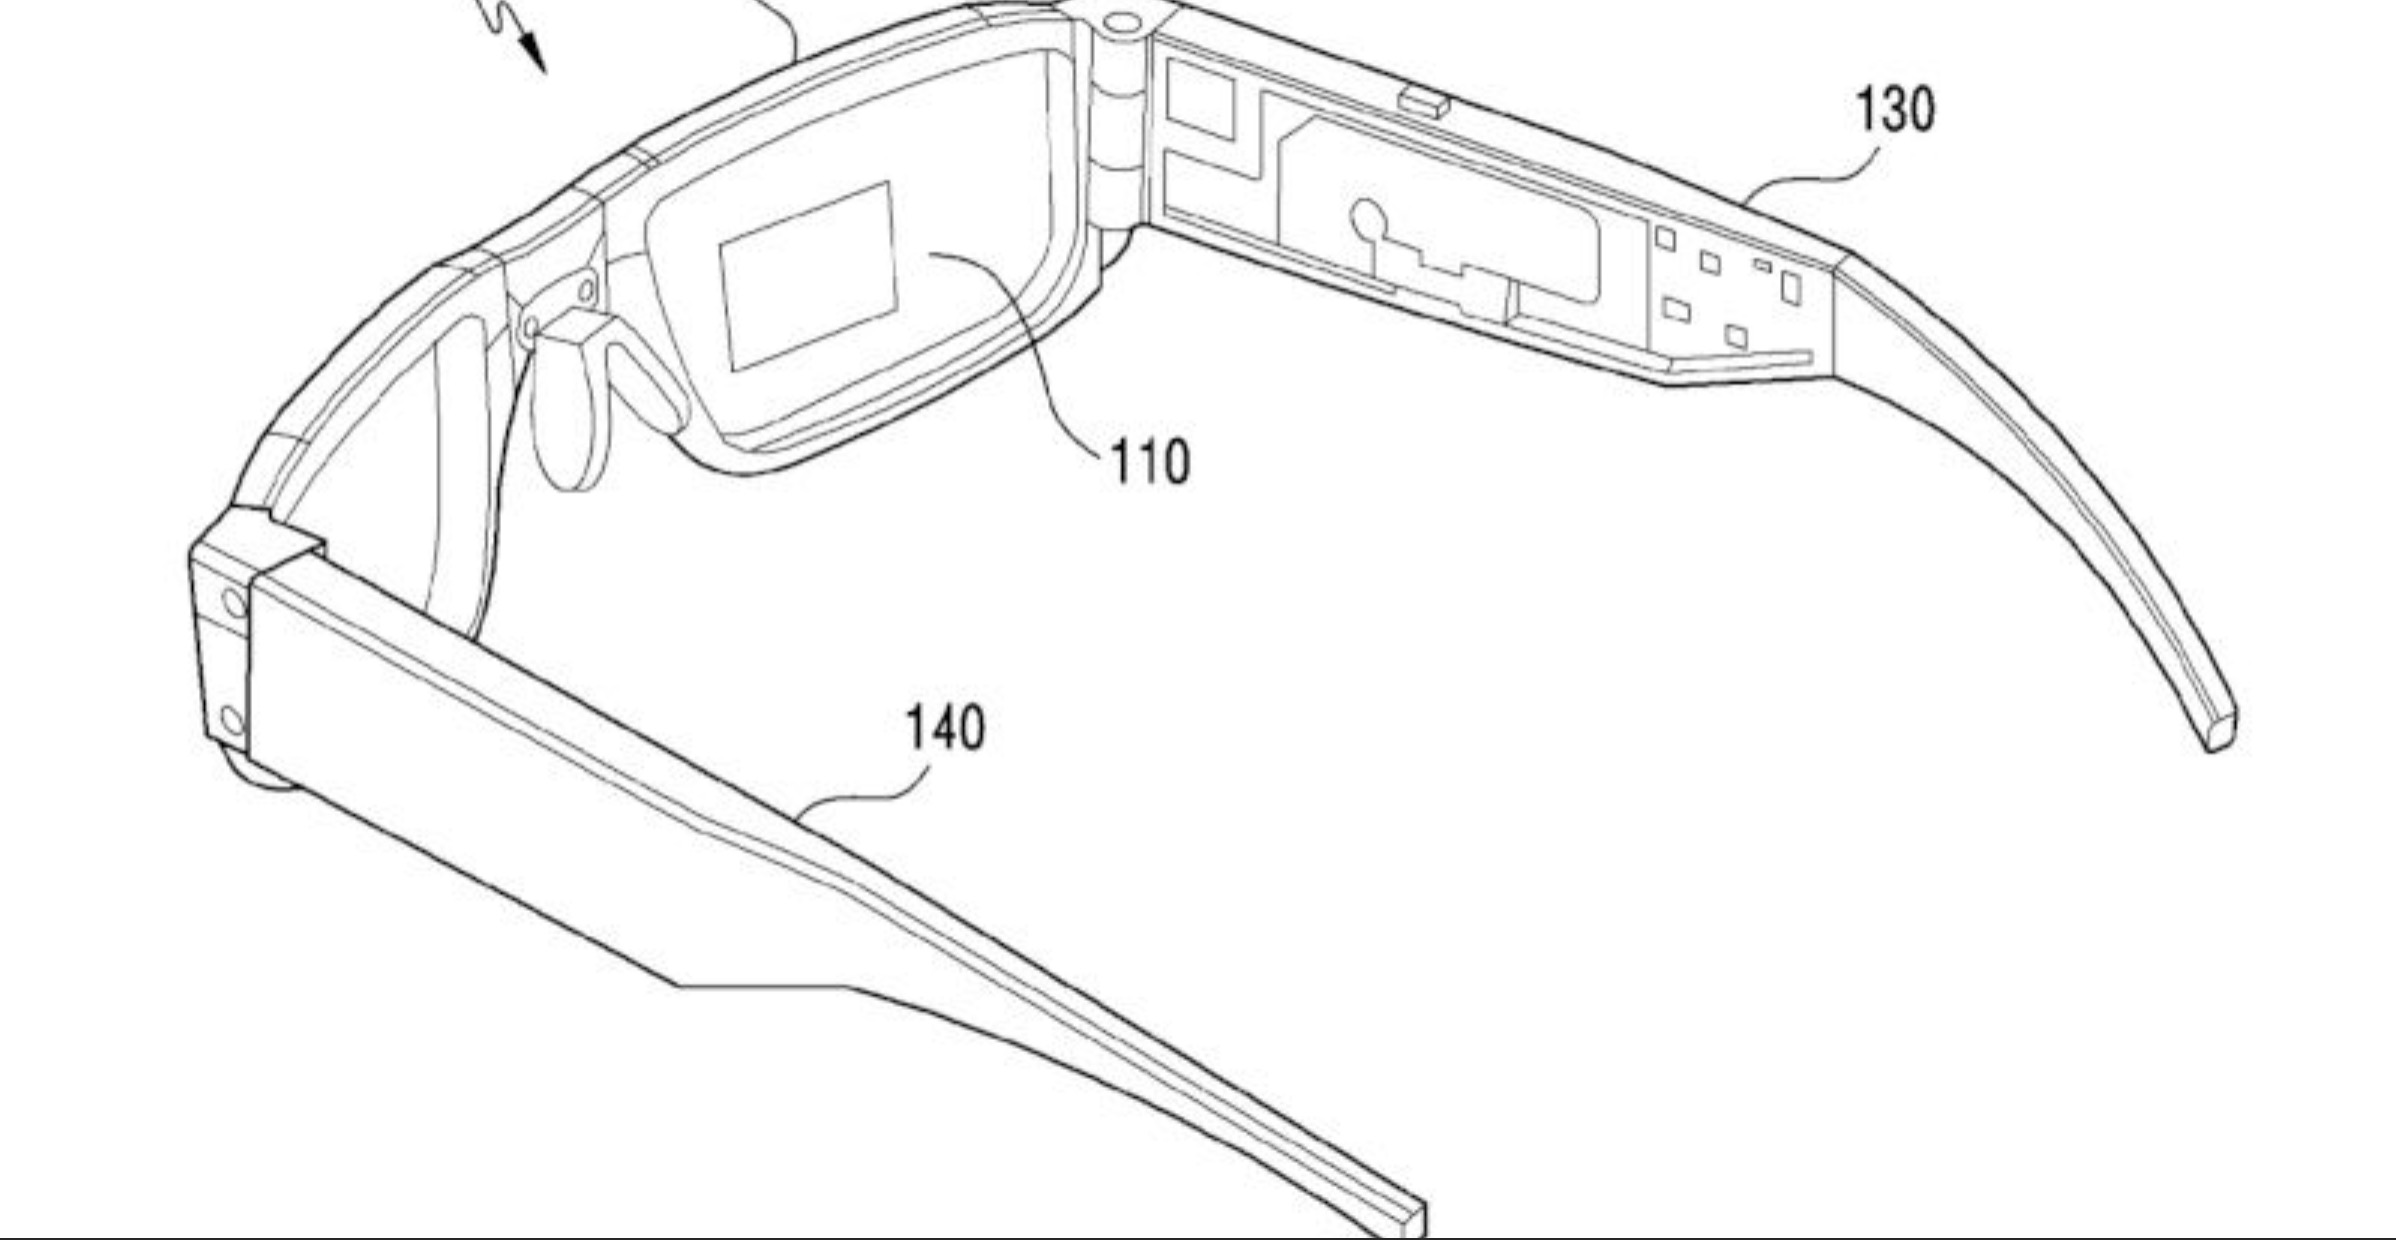 Slik ser Samsung for seg sin AR-brille.